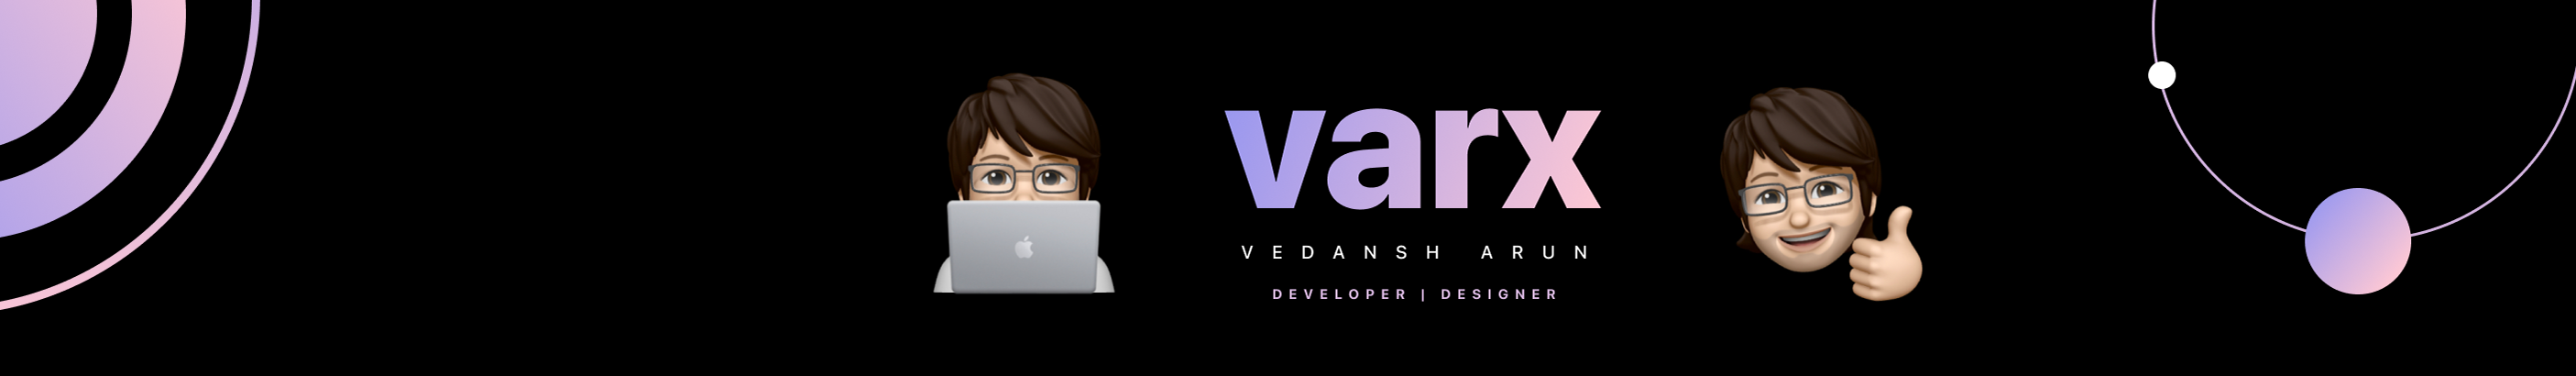 Vedansh Arun's profile banner